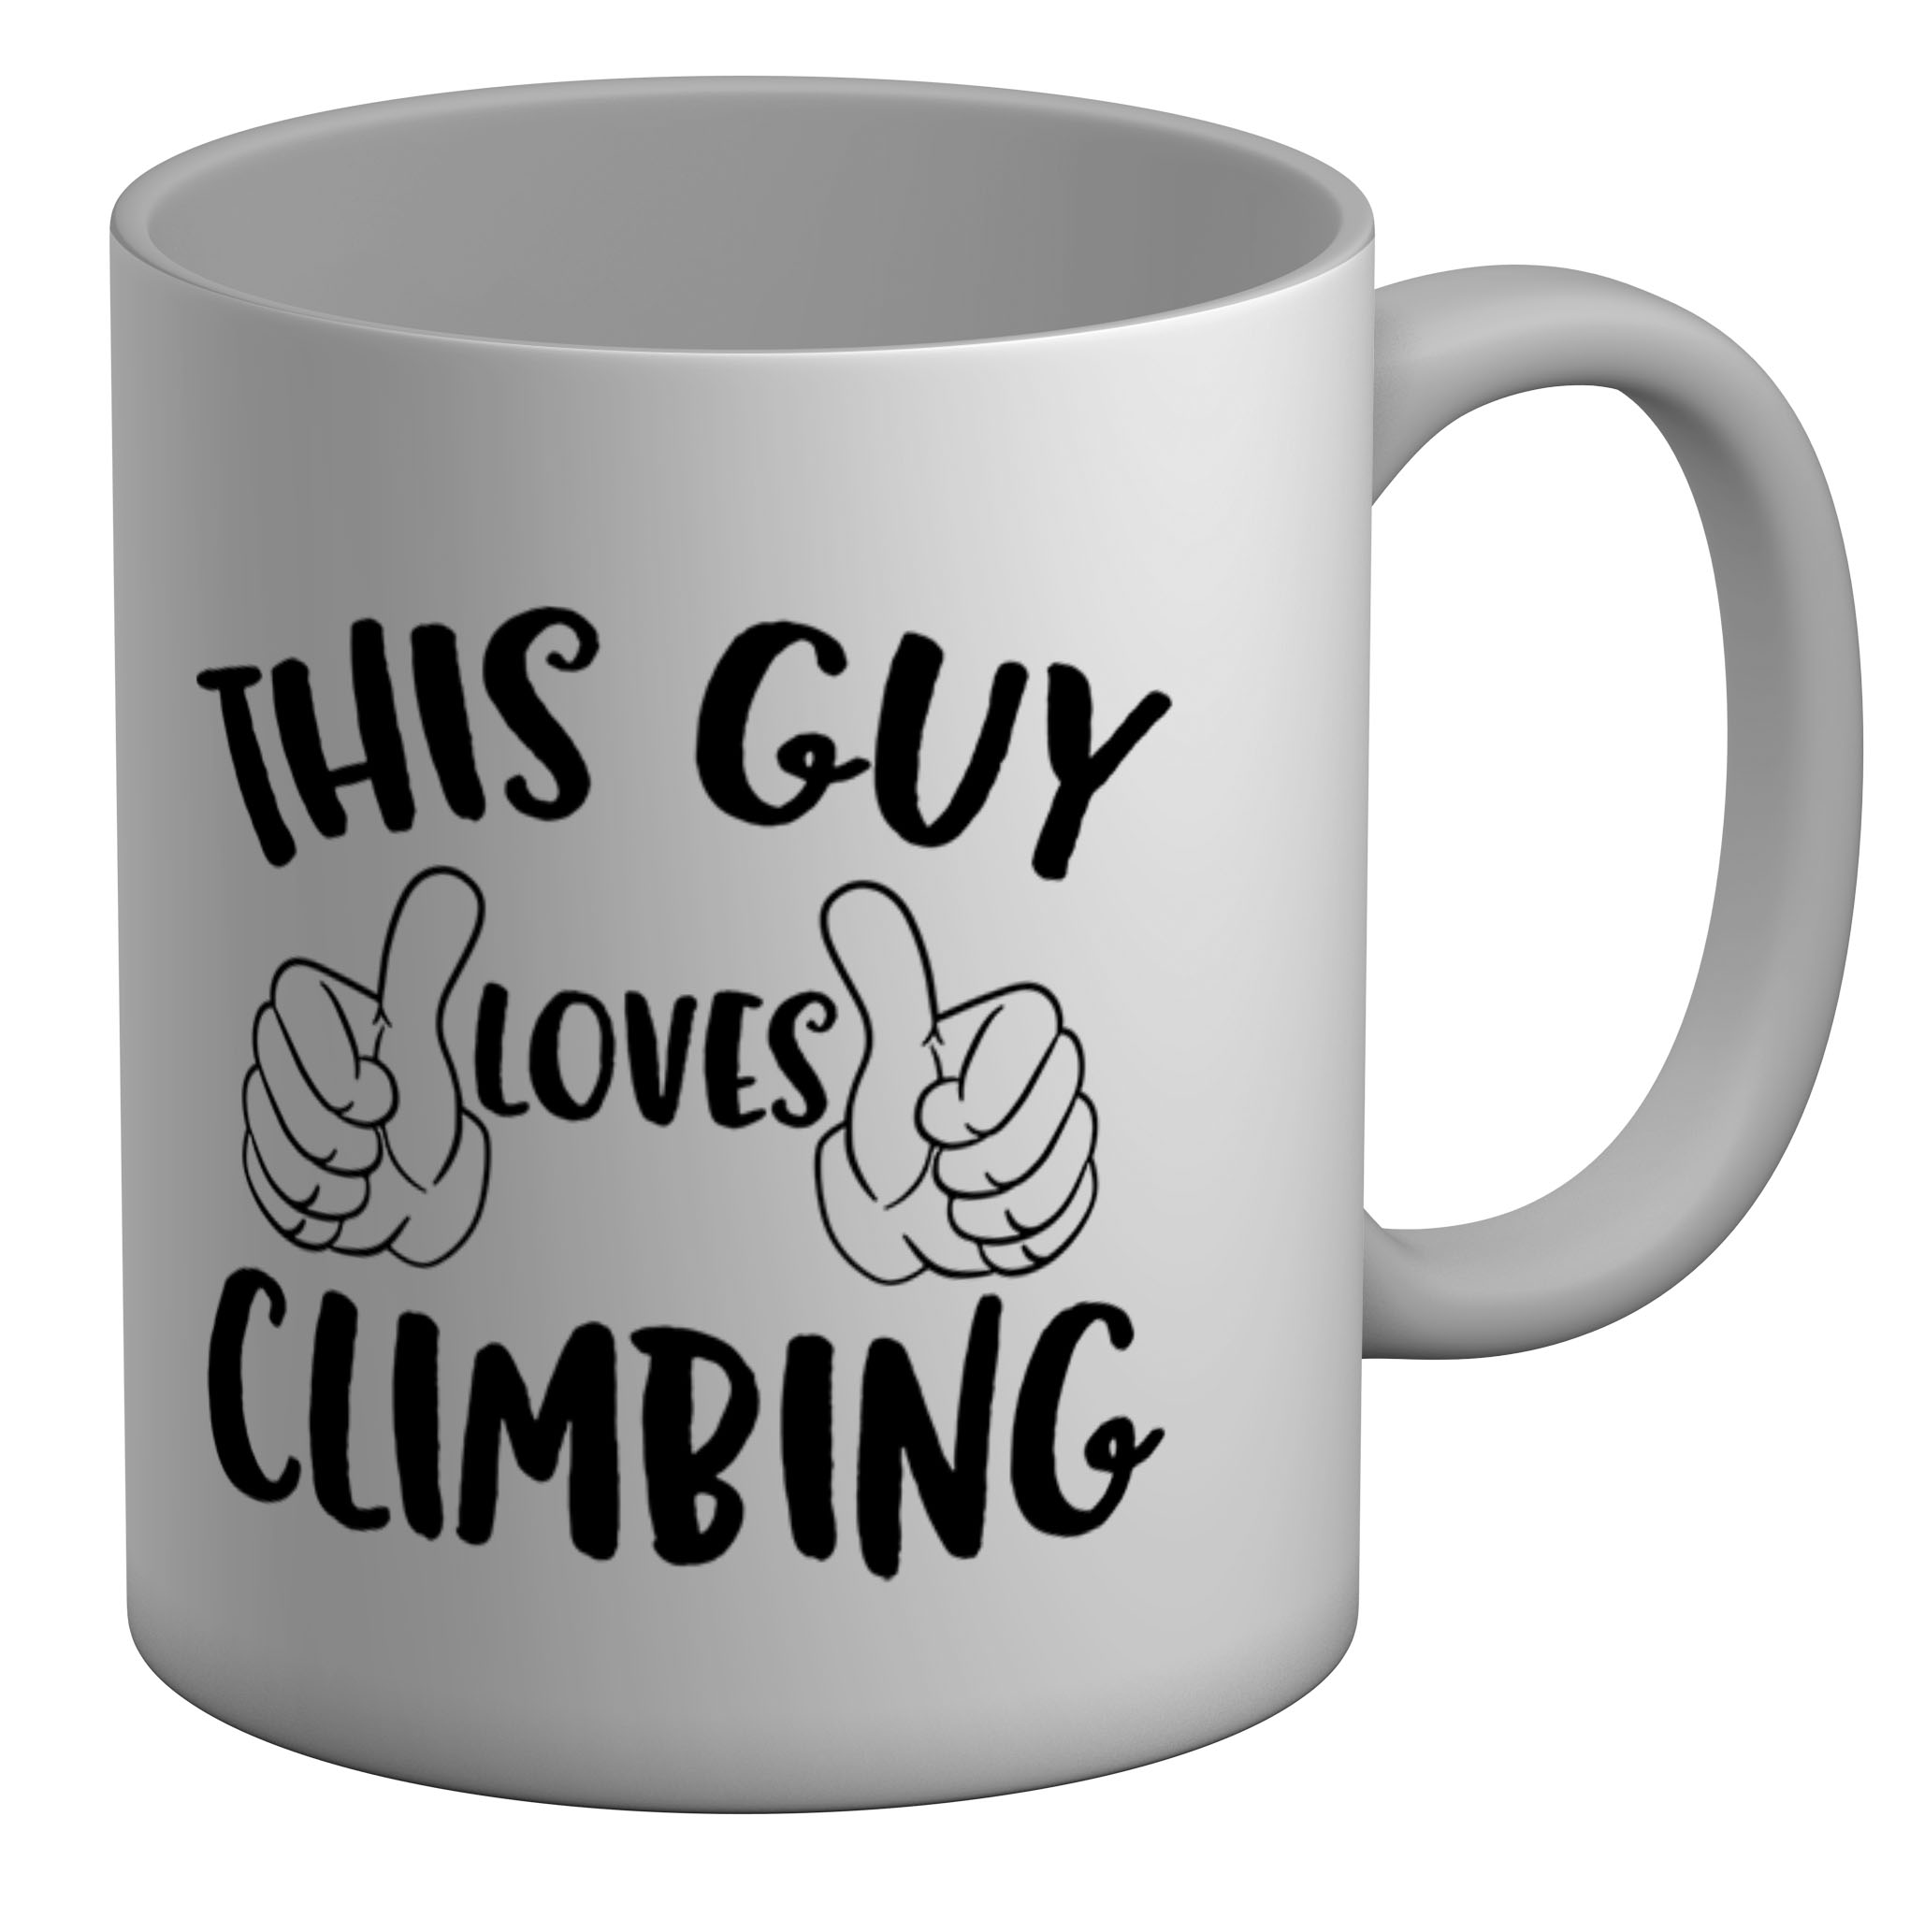 This Guy Loves Climbing White 11oz Mug Cup